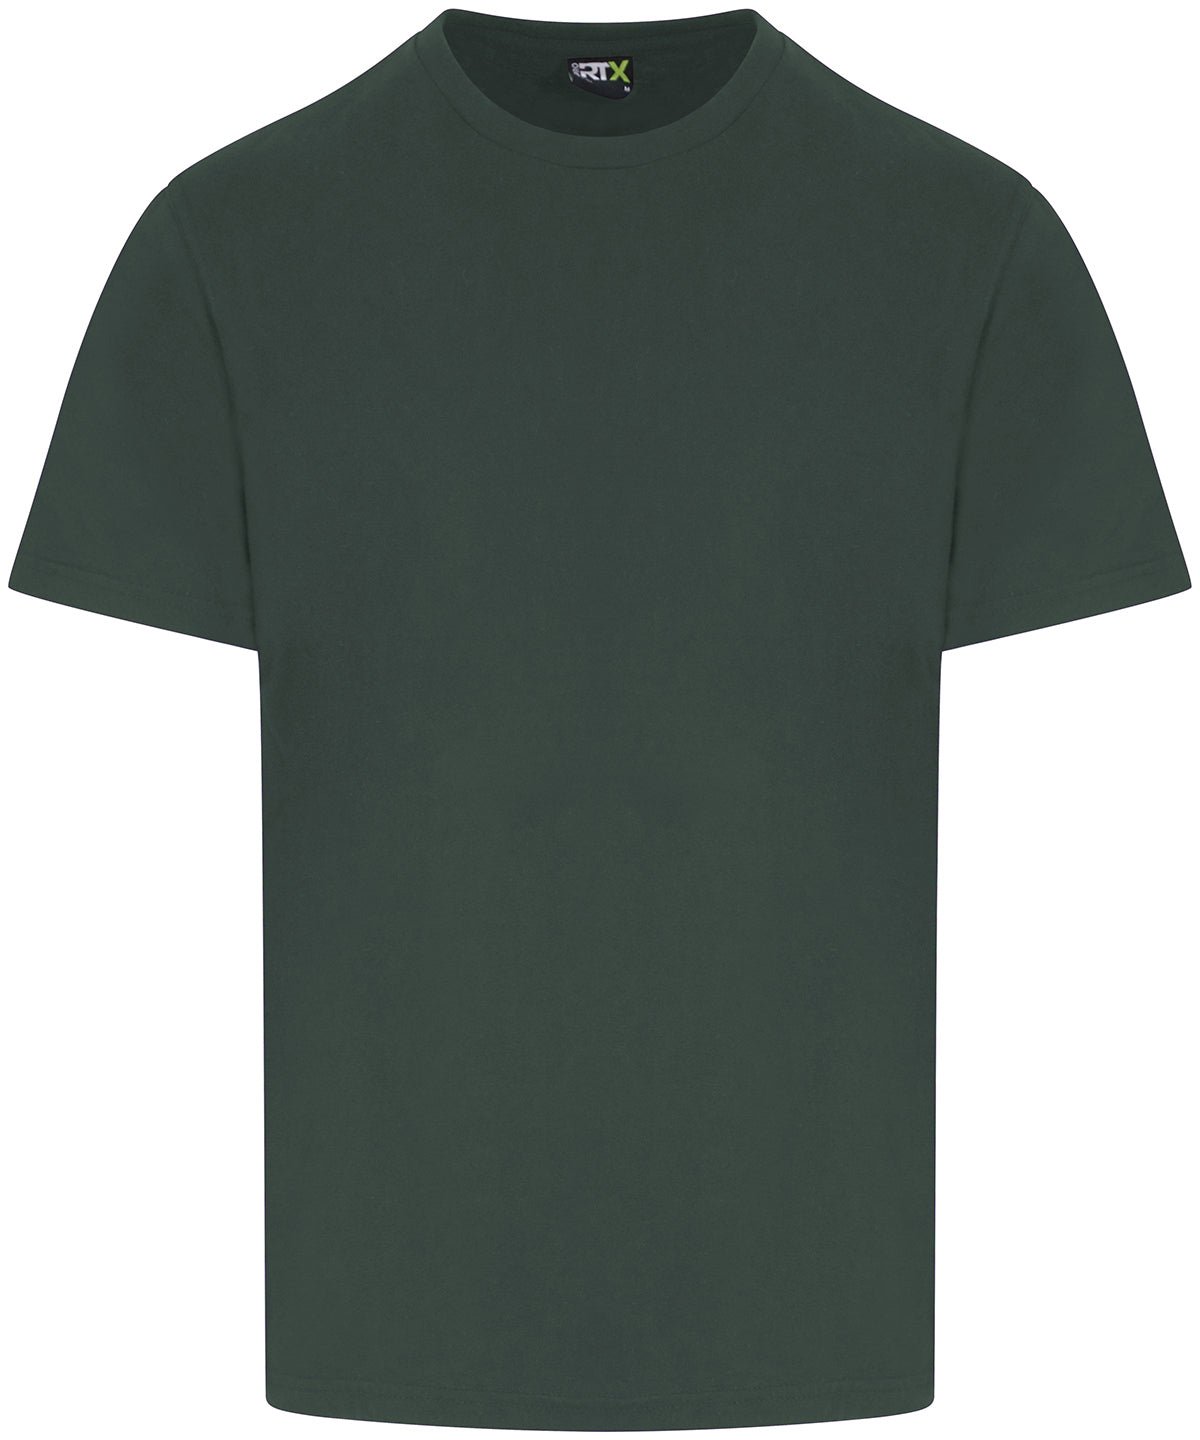 Personalised T-Shirts - Black ProRTX Pro t-shirt